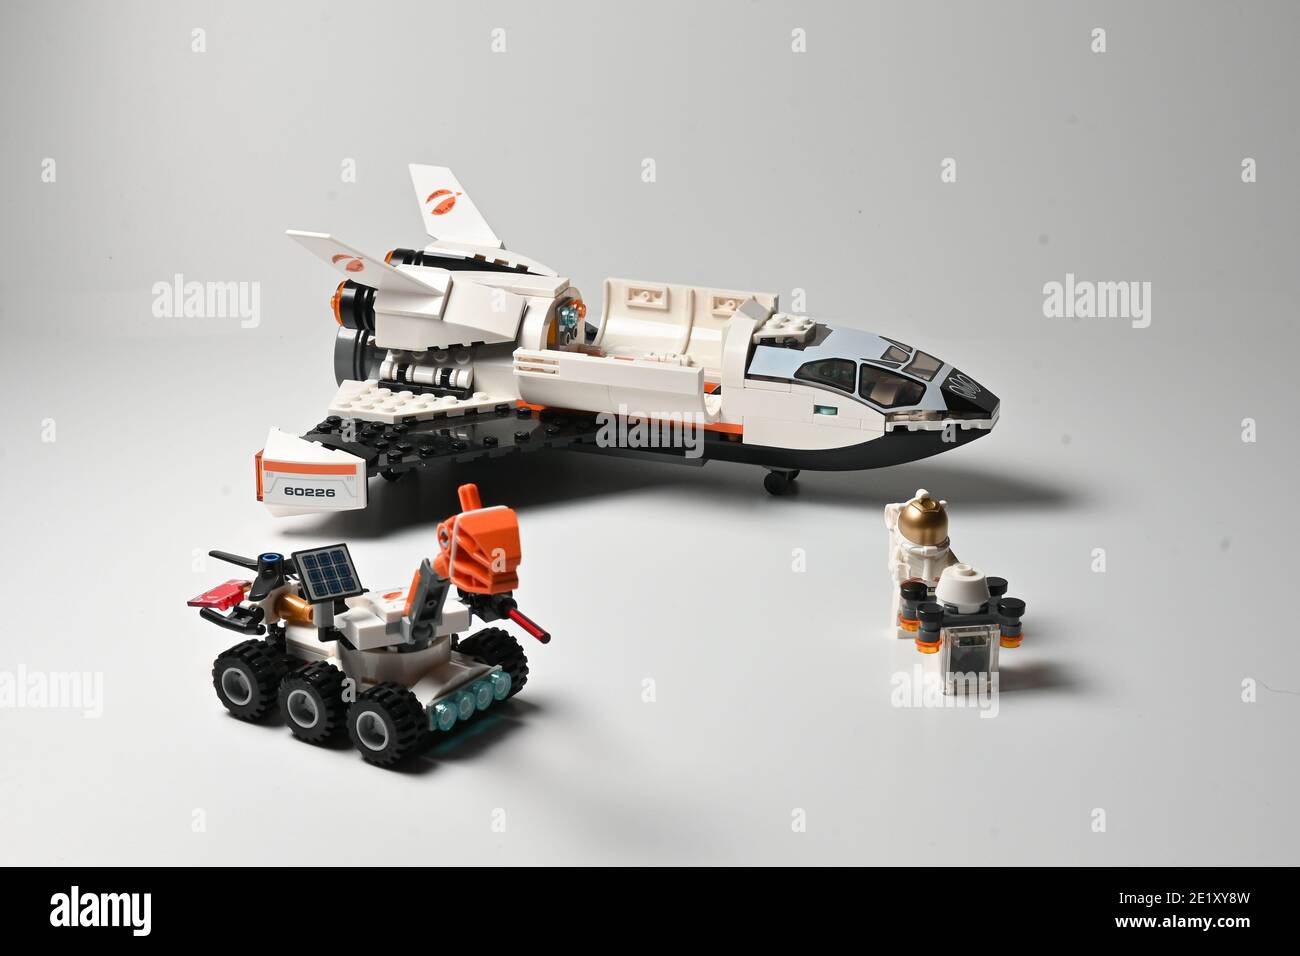 LEGO City Space Shuttle inspired by NASA's Mars exploration program. Stock Photo